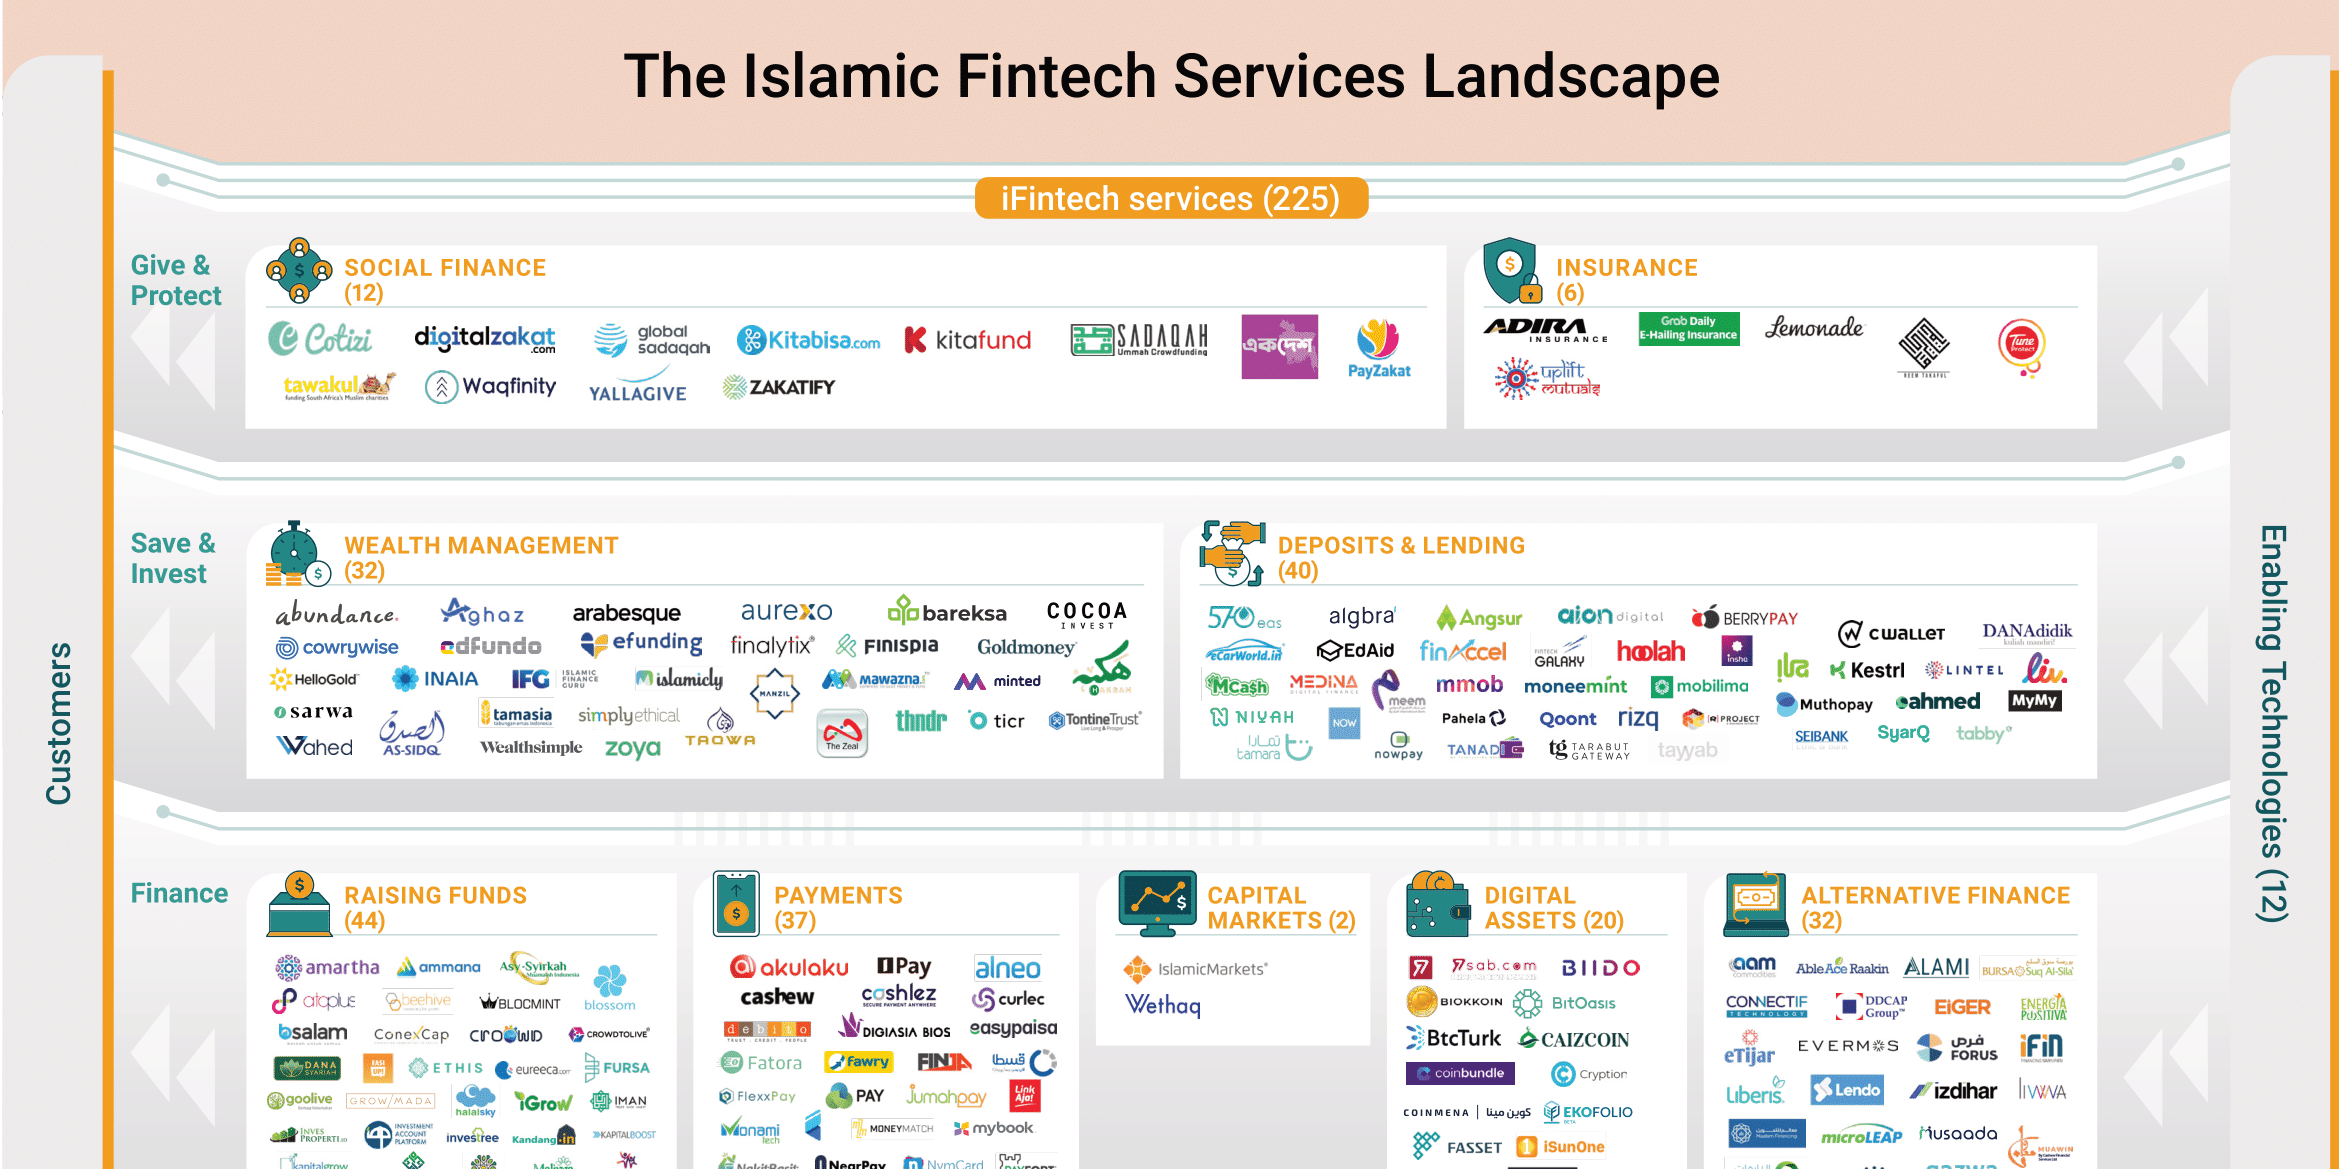 Islamic Fintechs to Grow to USD 128 Billion by 2025: Global Islamic Fintech Report 2021 